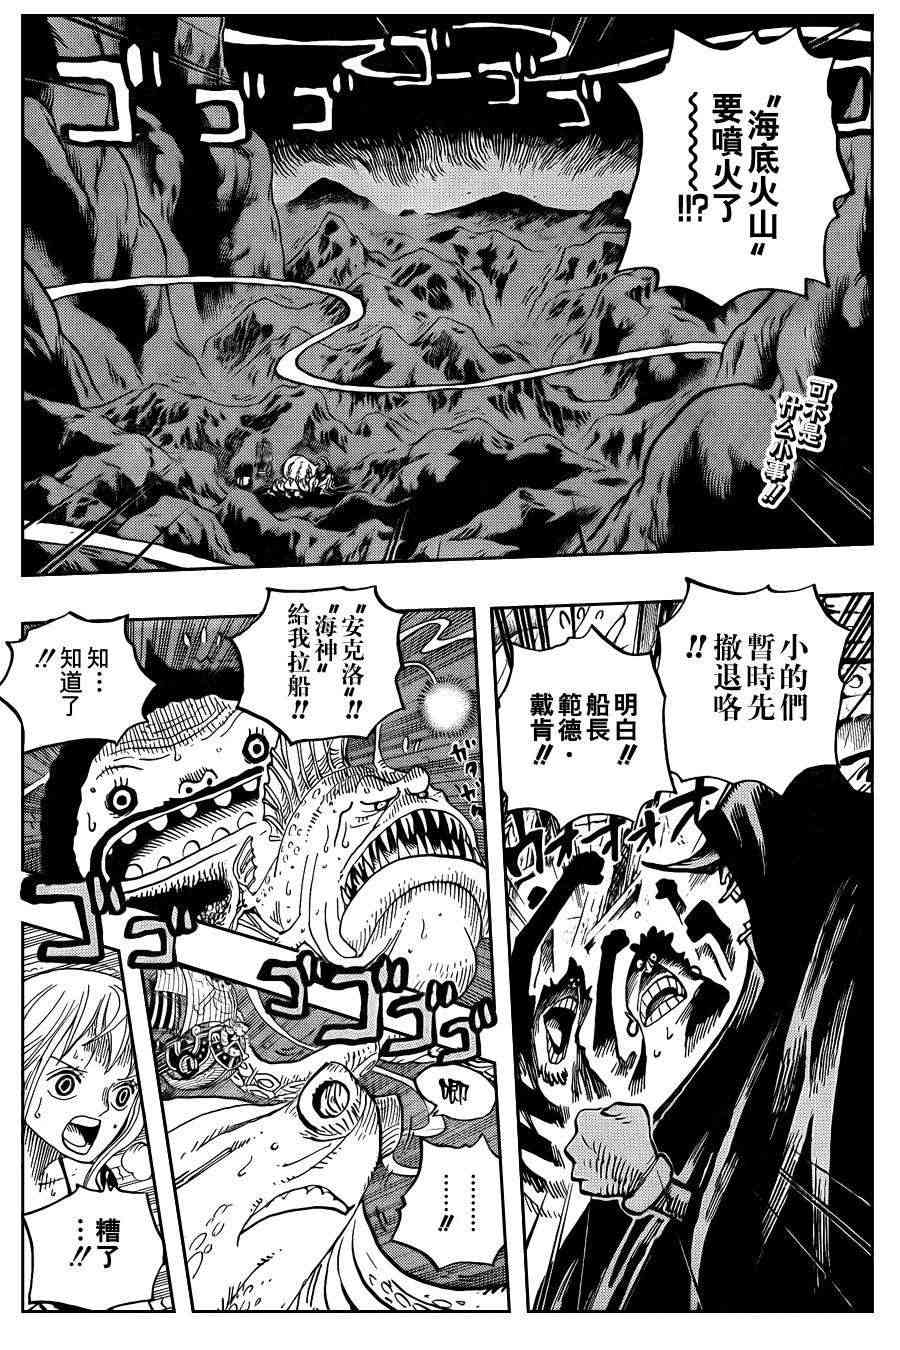 One Piece Manga 607 Spoiler Pics 0213